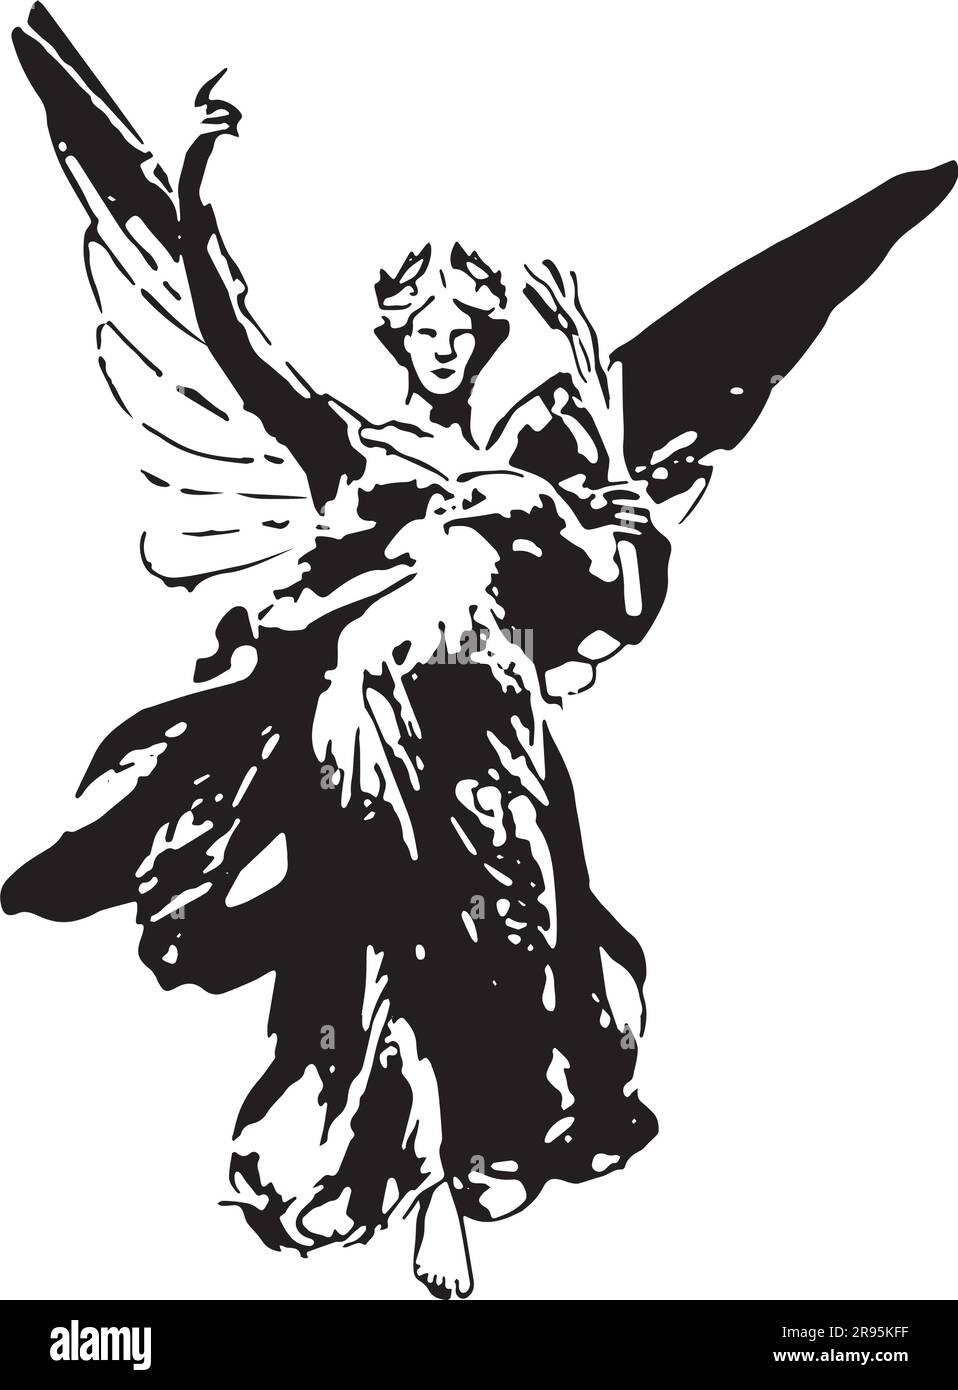 Angel Memorial Monument im Buckingham Palace Stencil schwarz-weiß - Vektor Stock Vektor